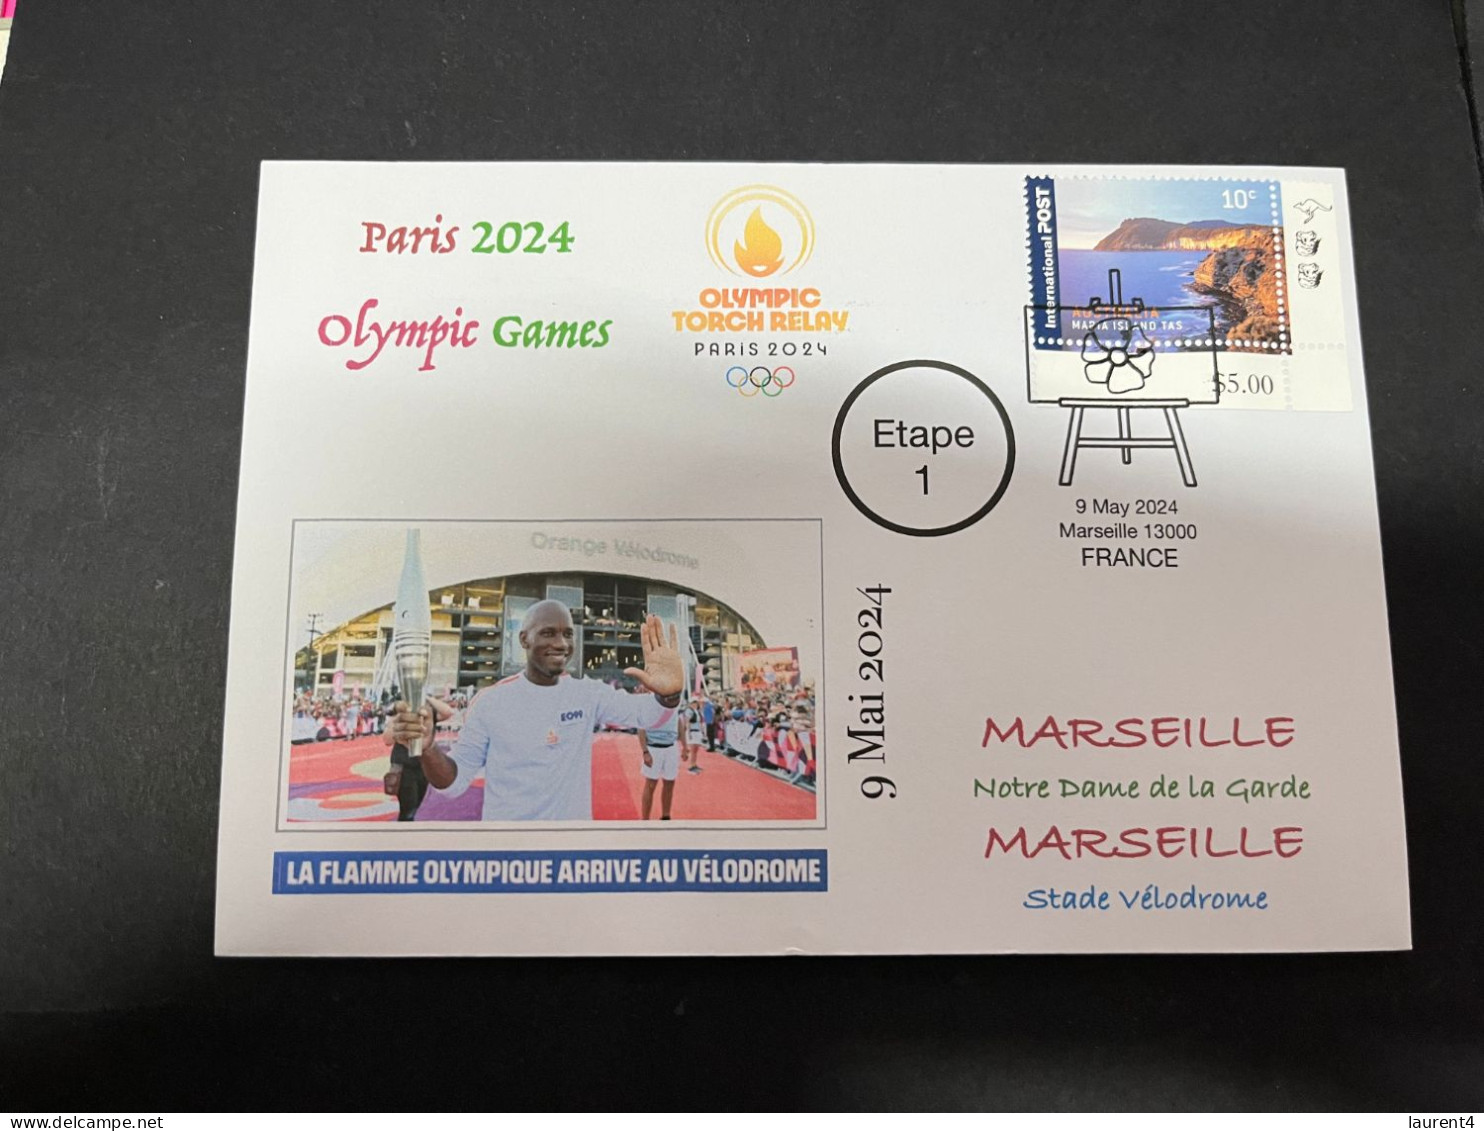 10-5-2024 (4 Z 37) Paris Olympic Games 2024 - Torch Relay (Etape 1) In Marseille (9-5-2024) With OZ Stamp - Estate 2024 : Parigi